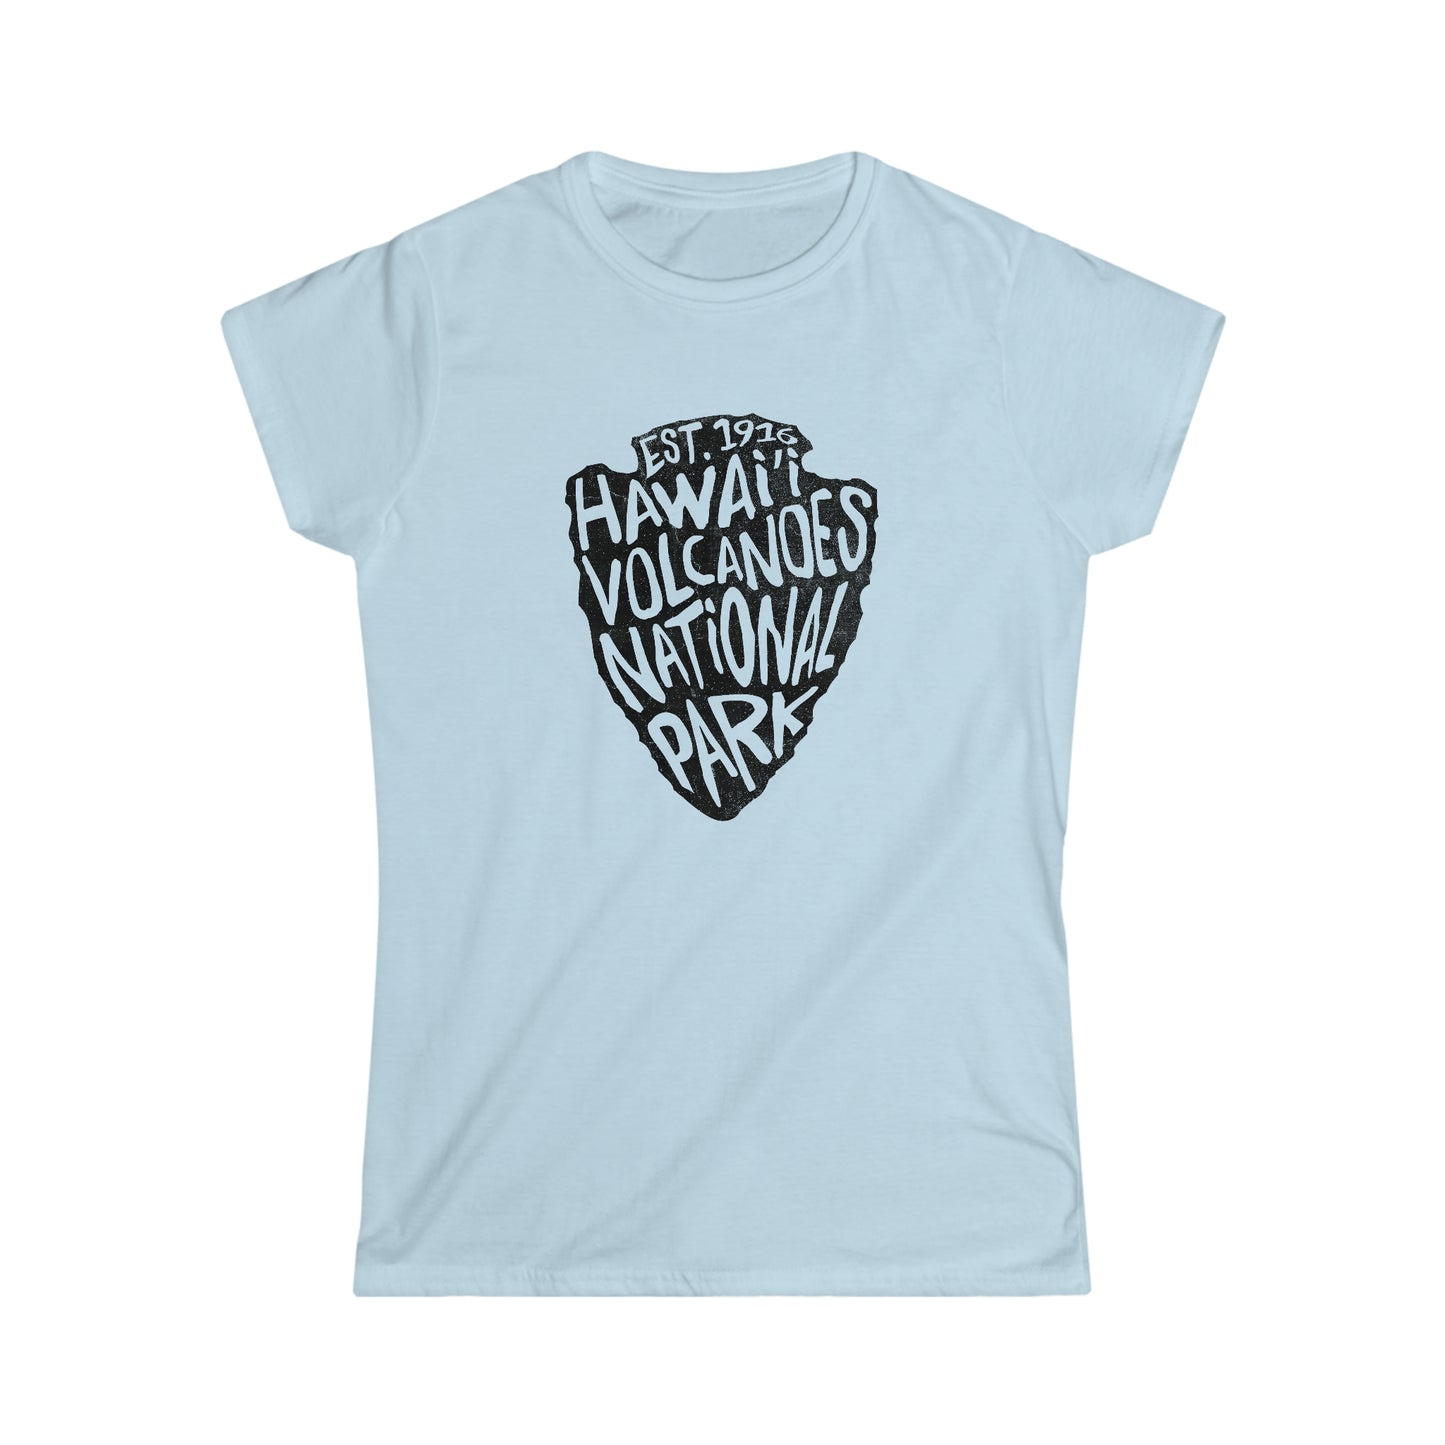 Hawai'i Volcanoes National Park Women's T-Shirt - Arrowhead Design